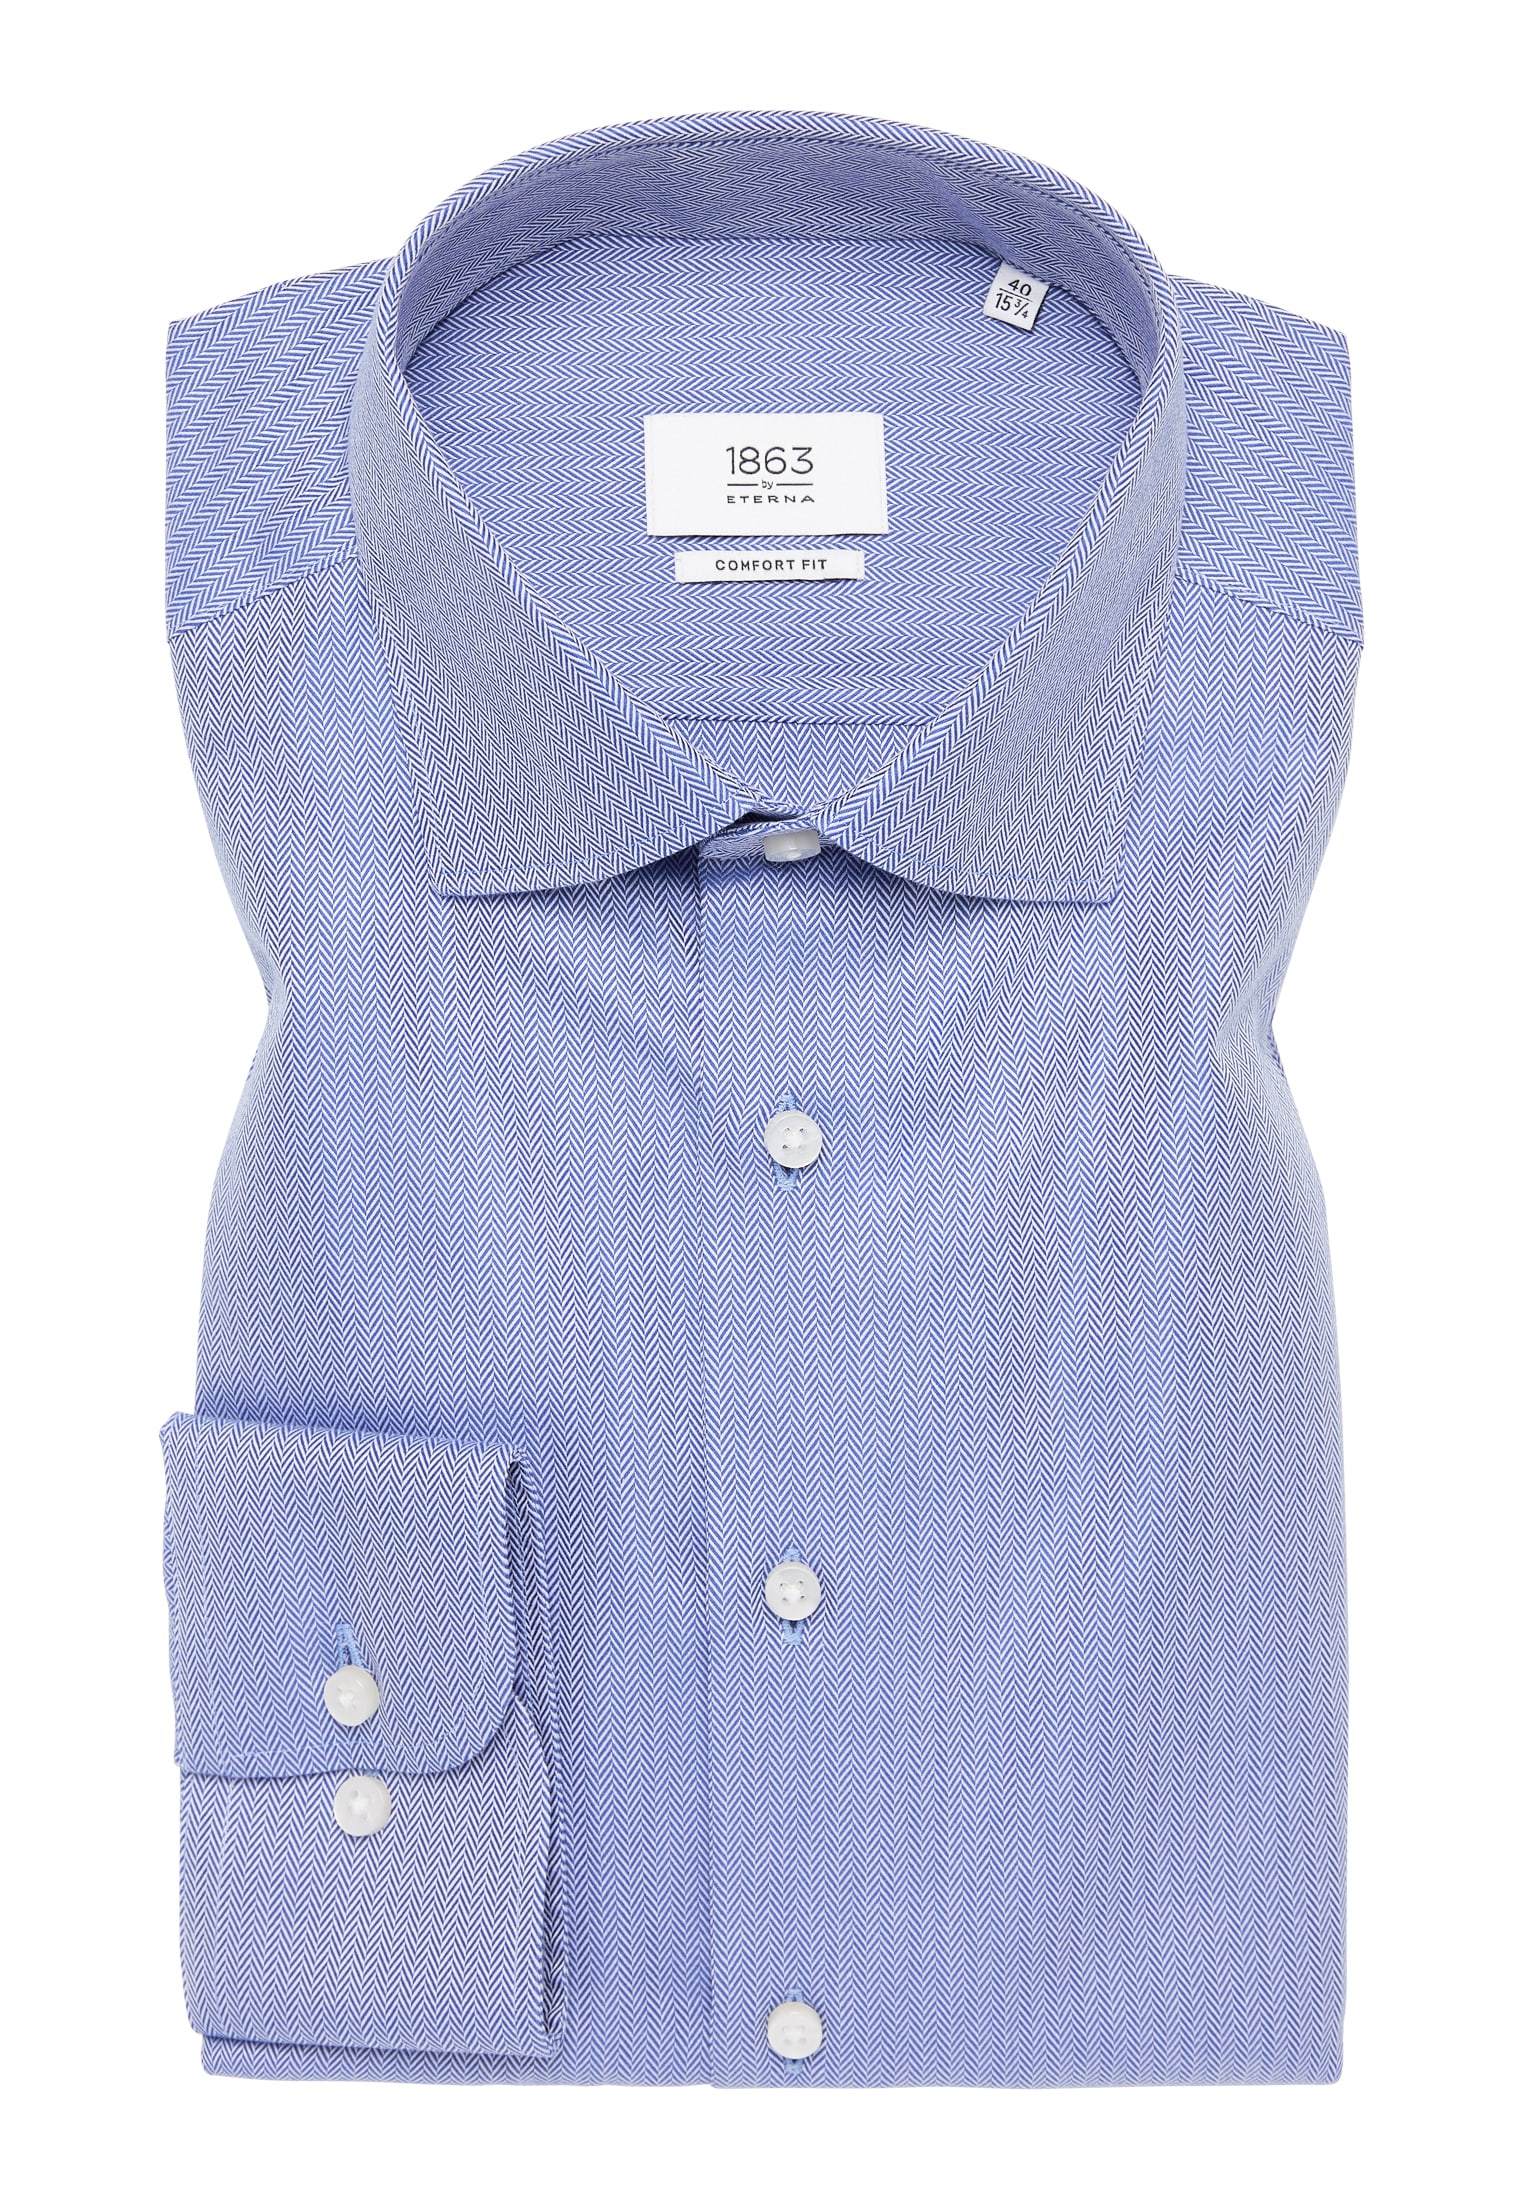 COMFORT FIT Shirt | blue long 1SH12506-01-51-40-1/1 royal | blue 40 | | plain sleeve royal in